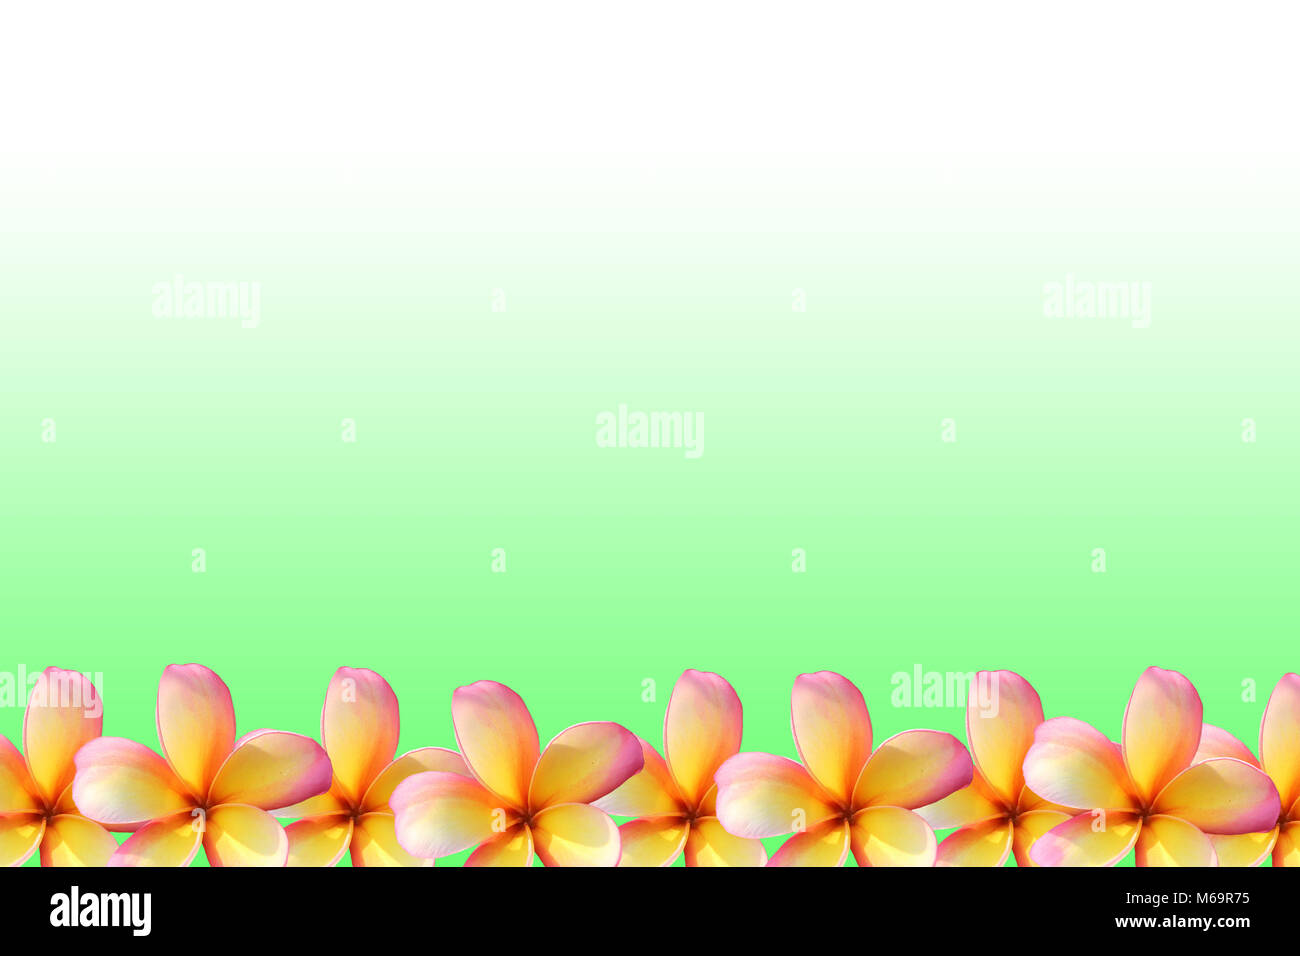 Frangipani, Plumeria flower frame on green background Stock Photo